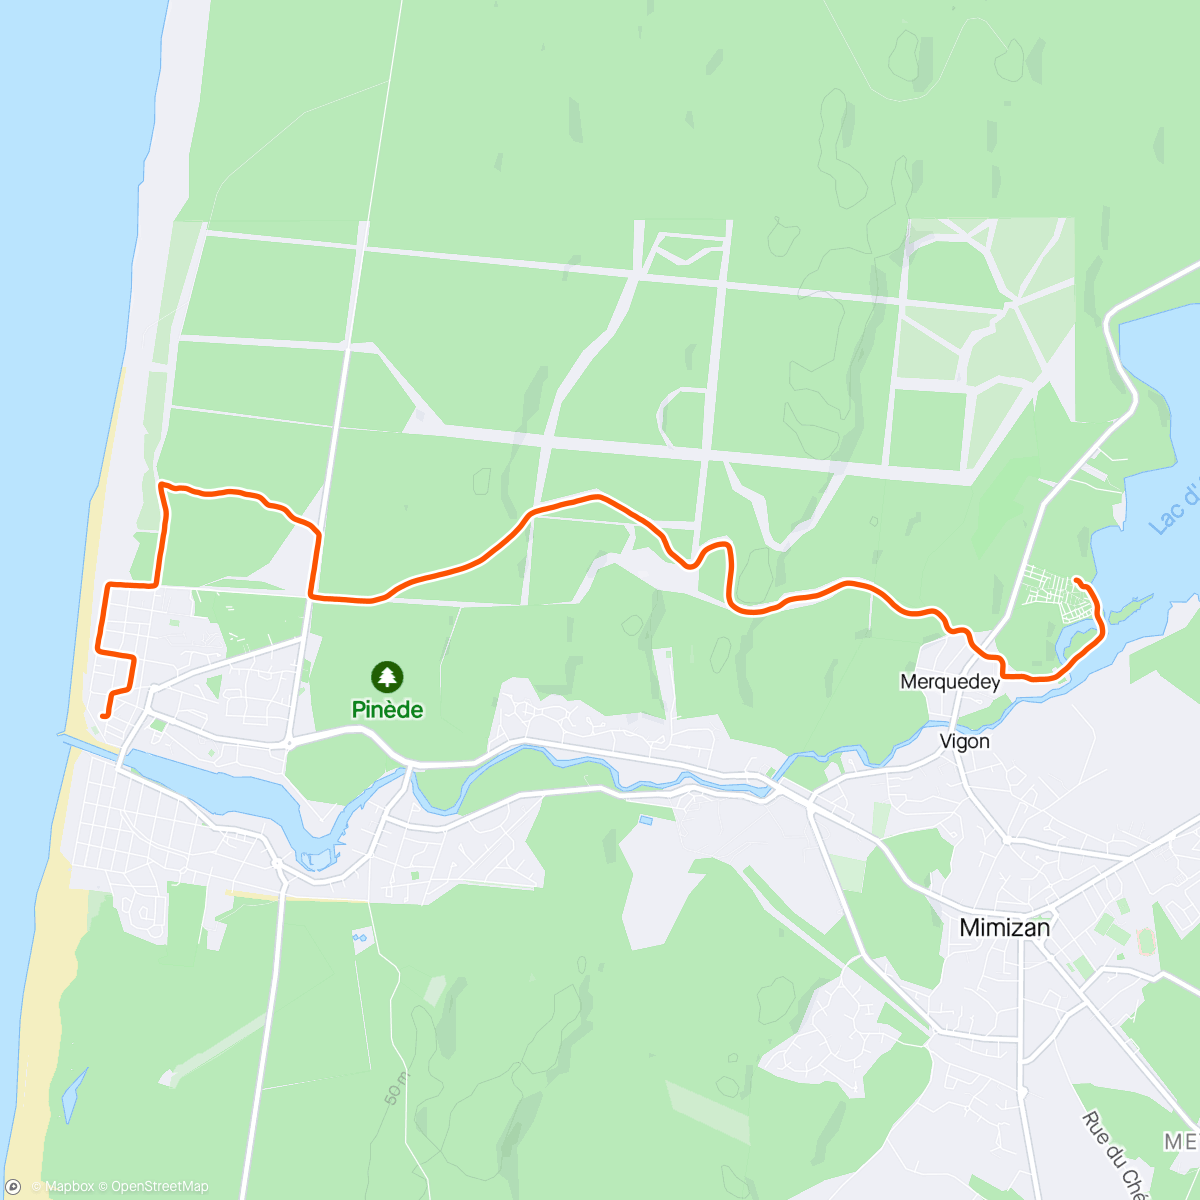 「Triathlon de Mimizan - CAP」活動的地圖